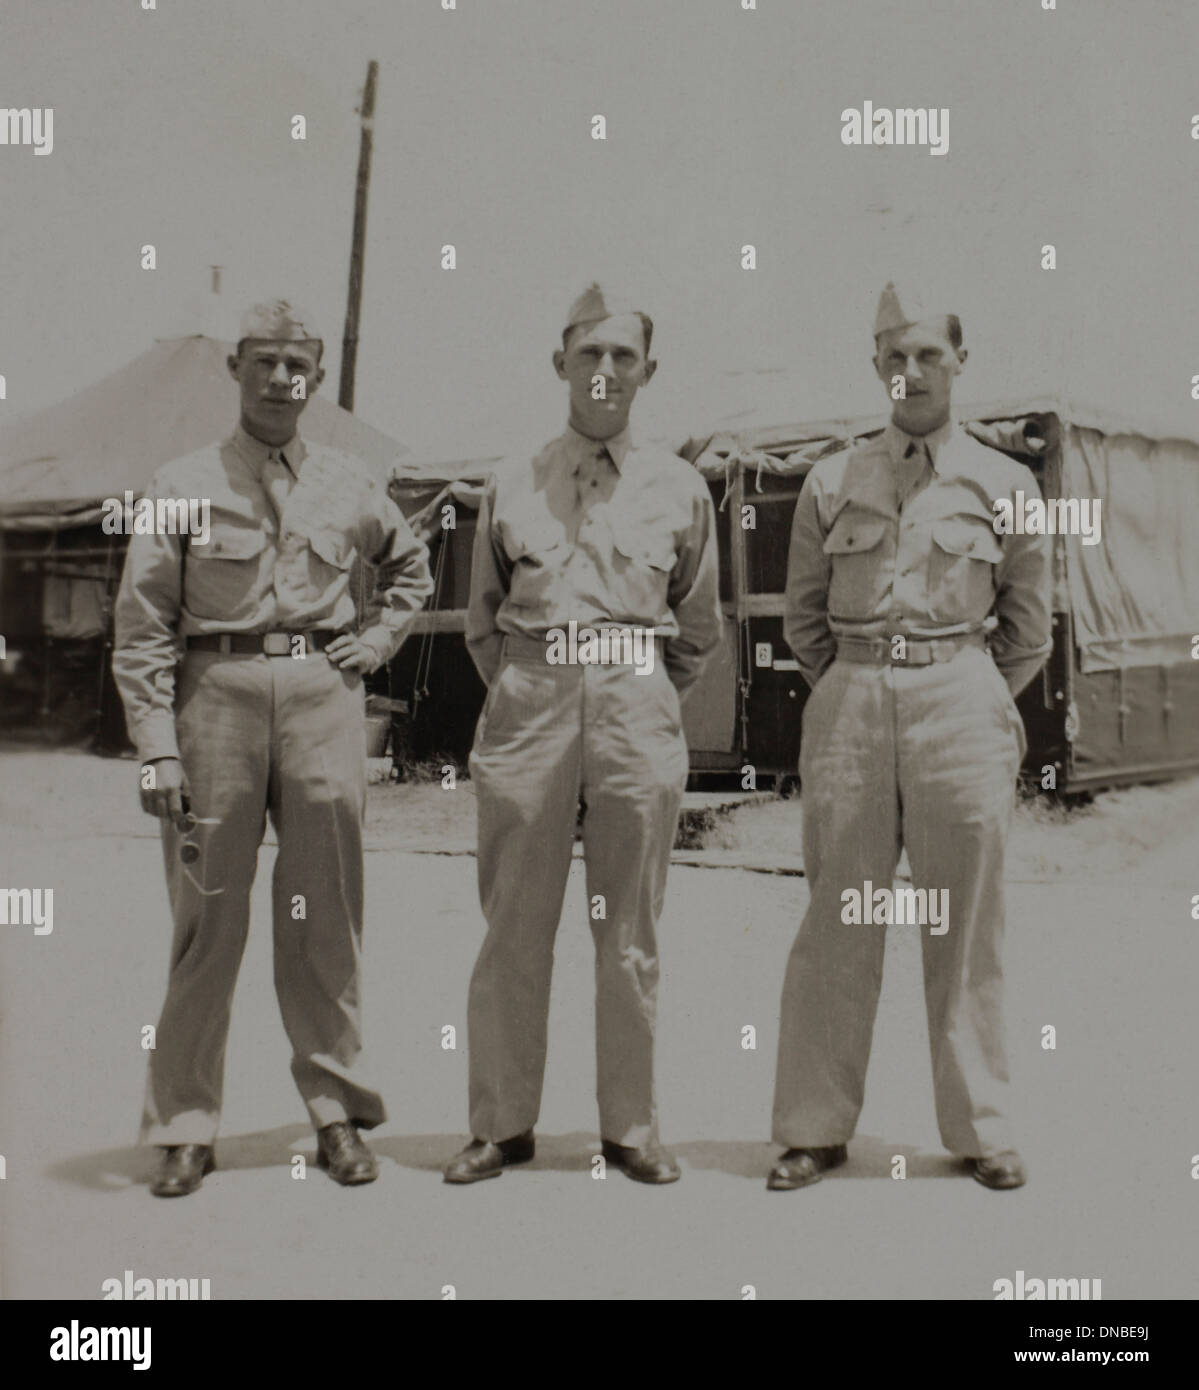 Drei Soldaten in Uniform, Portrait, WWII, 325. Infanterie, u. s. Army Militär Basis, Camp Claiborne, Louisiana, USA, 1942 Stockfoto